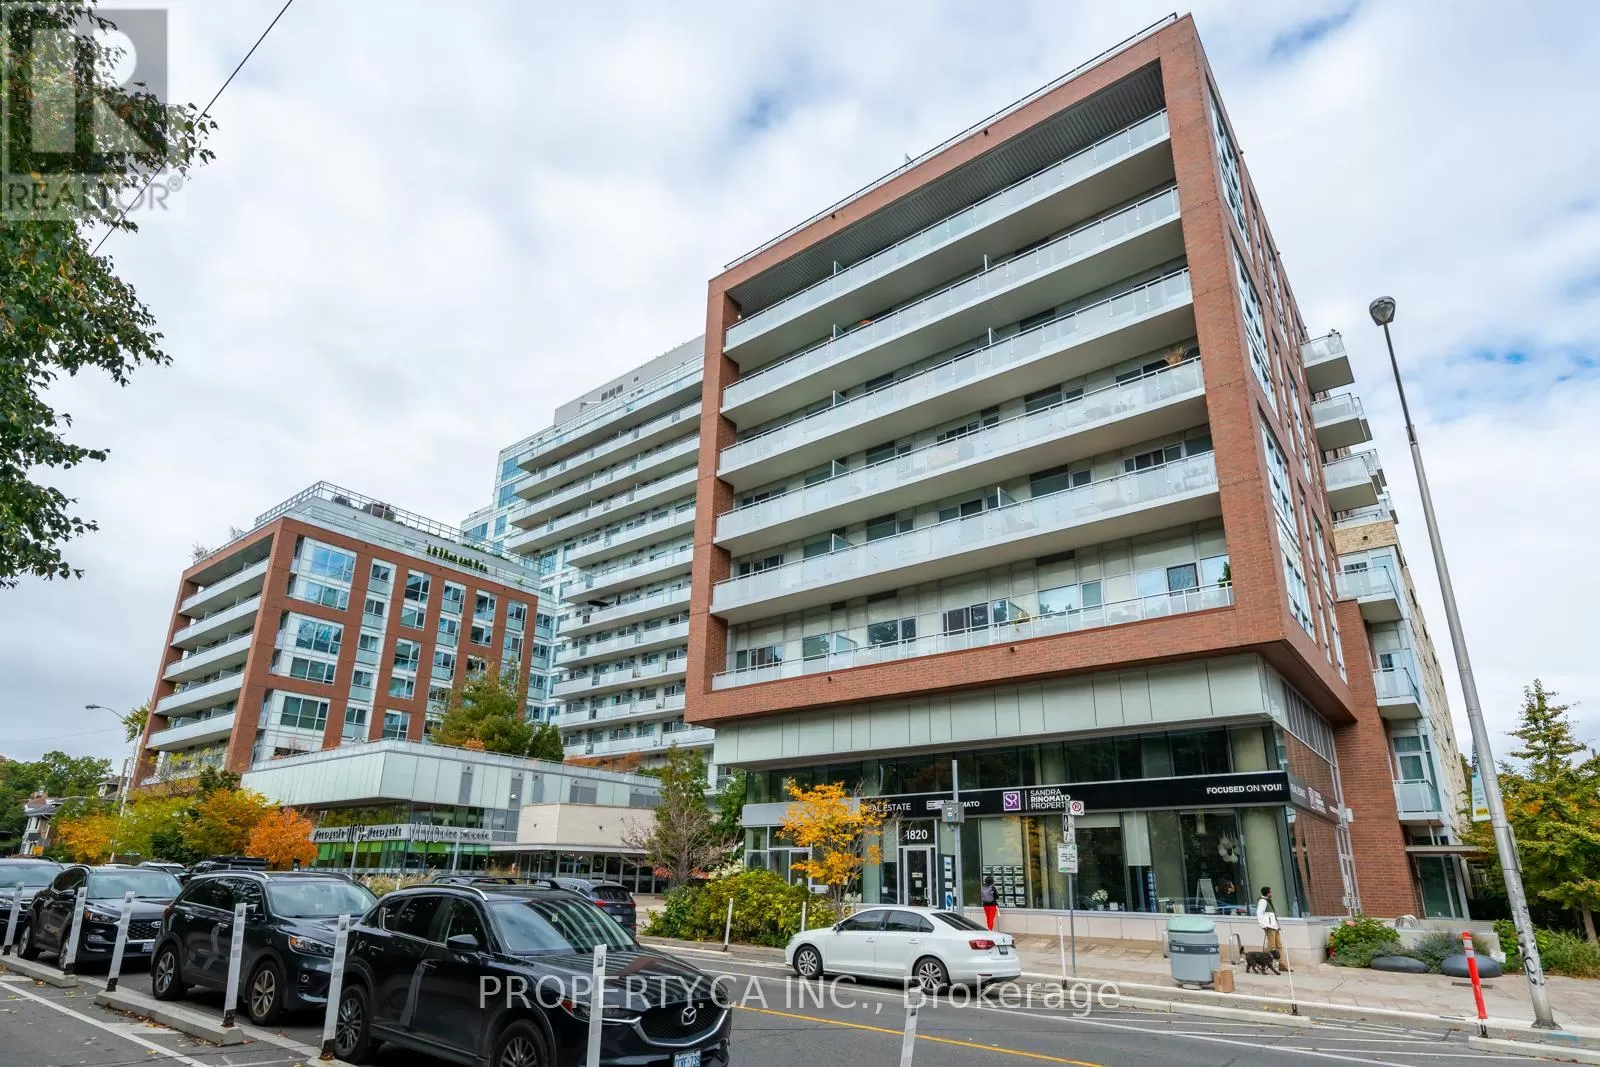 Apartment for rent: 335 - 1830 Bloor Street W, Toronto, Ontario M6P 0A2